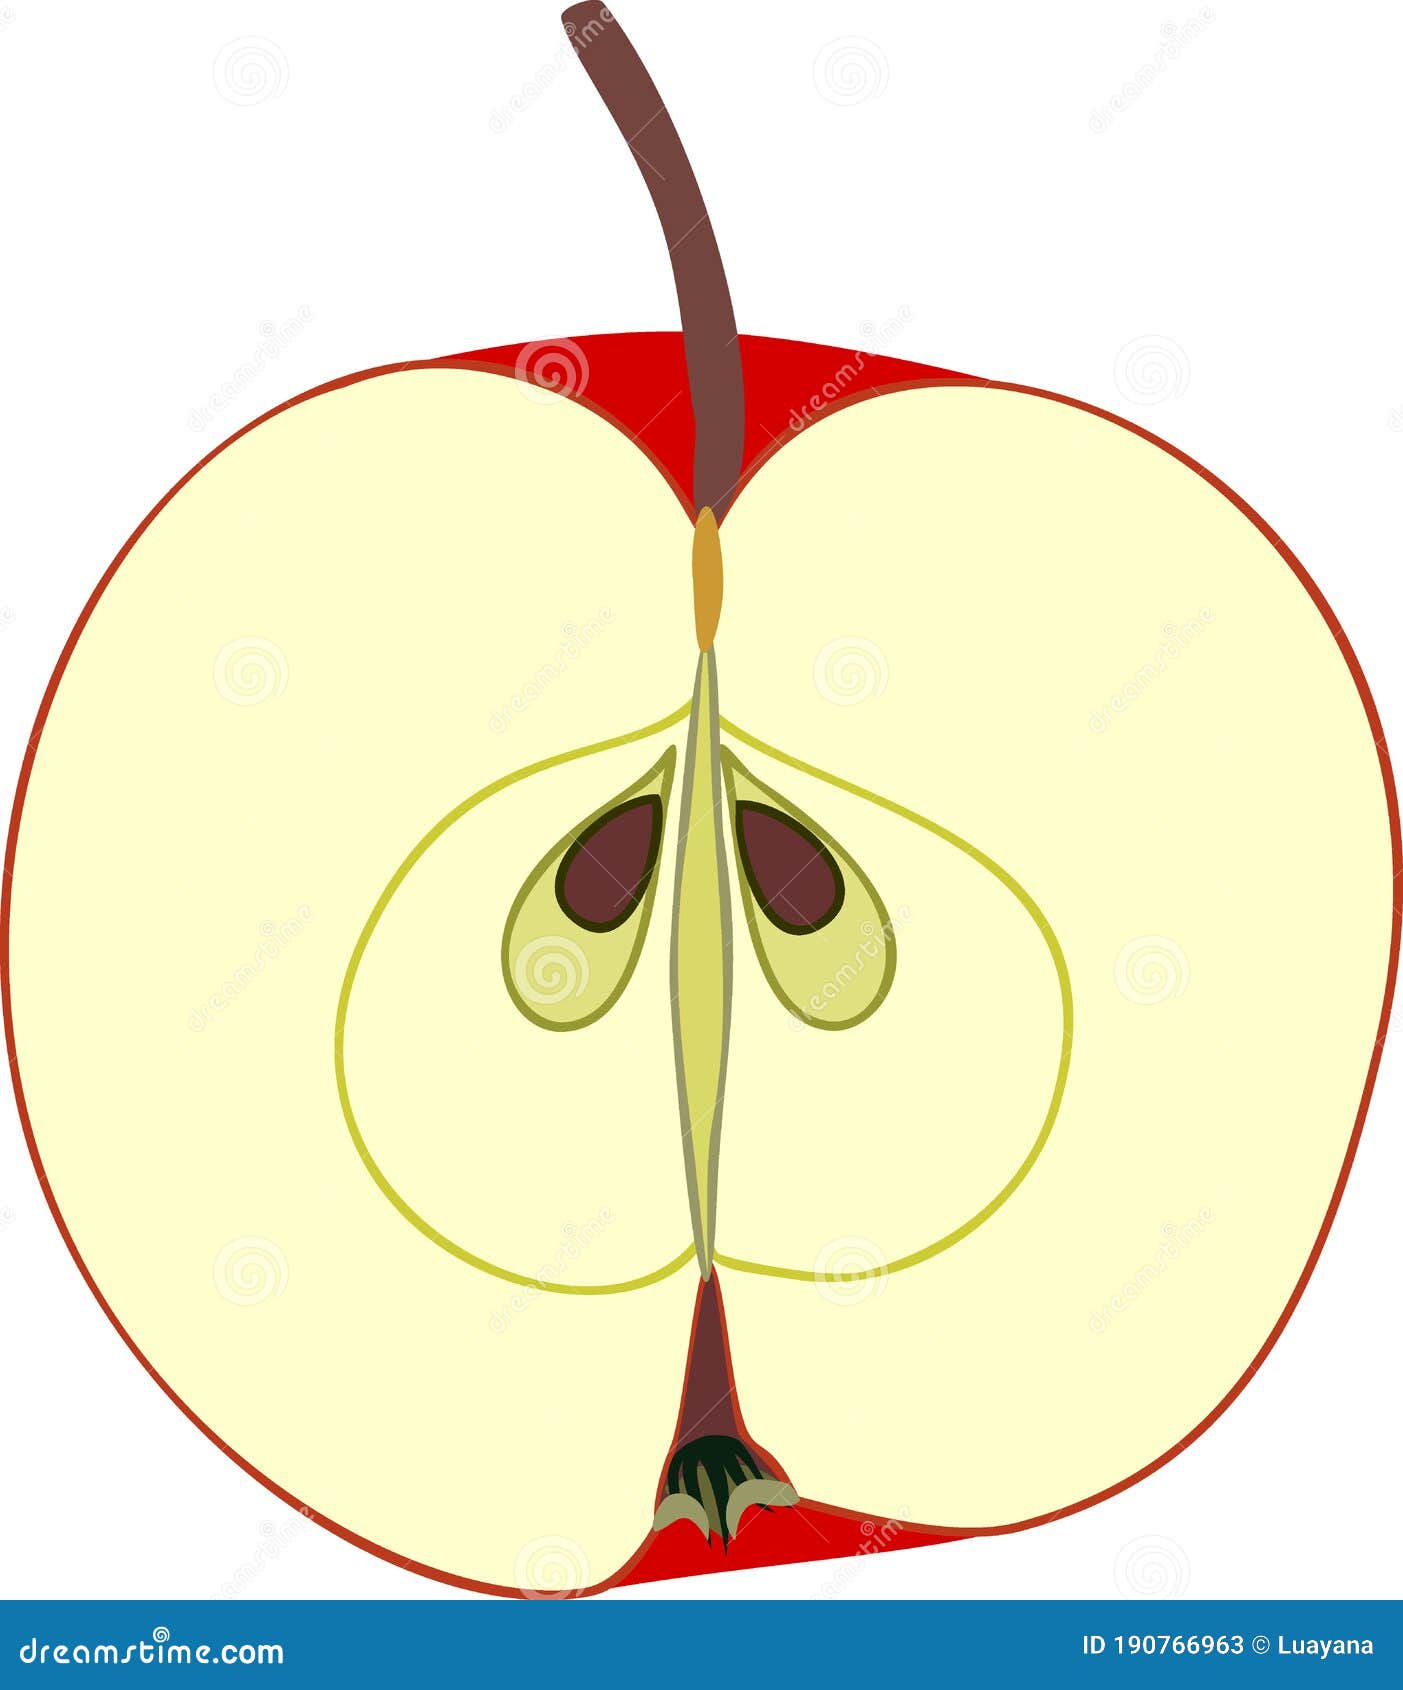 ripe red apple in longitudinal section  on white